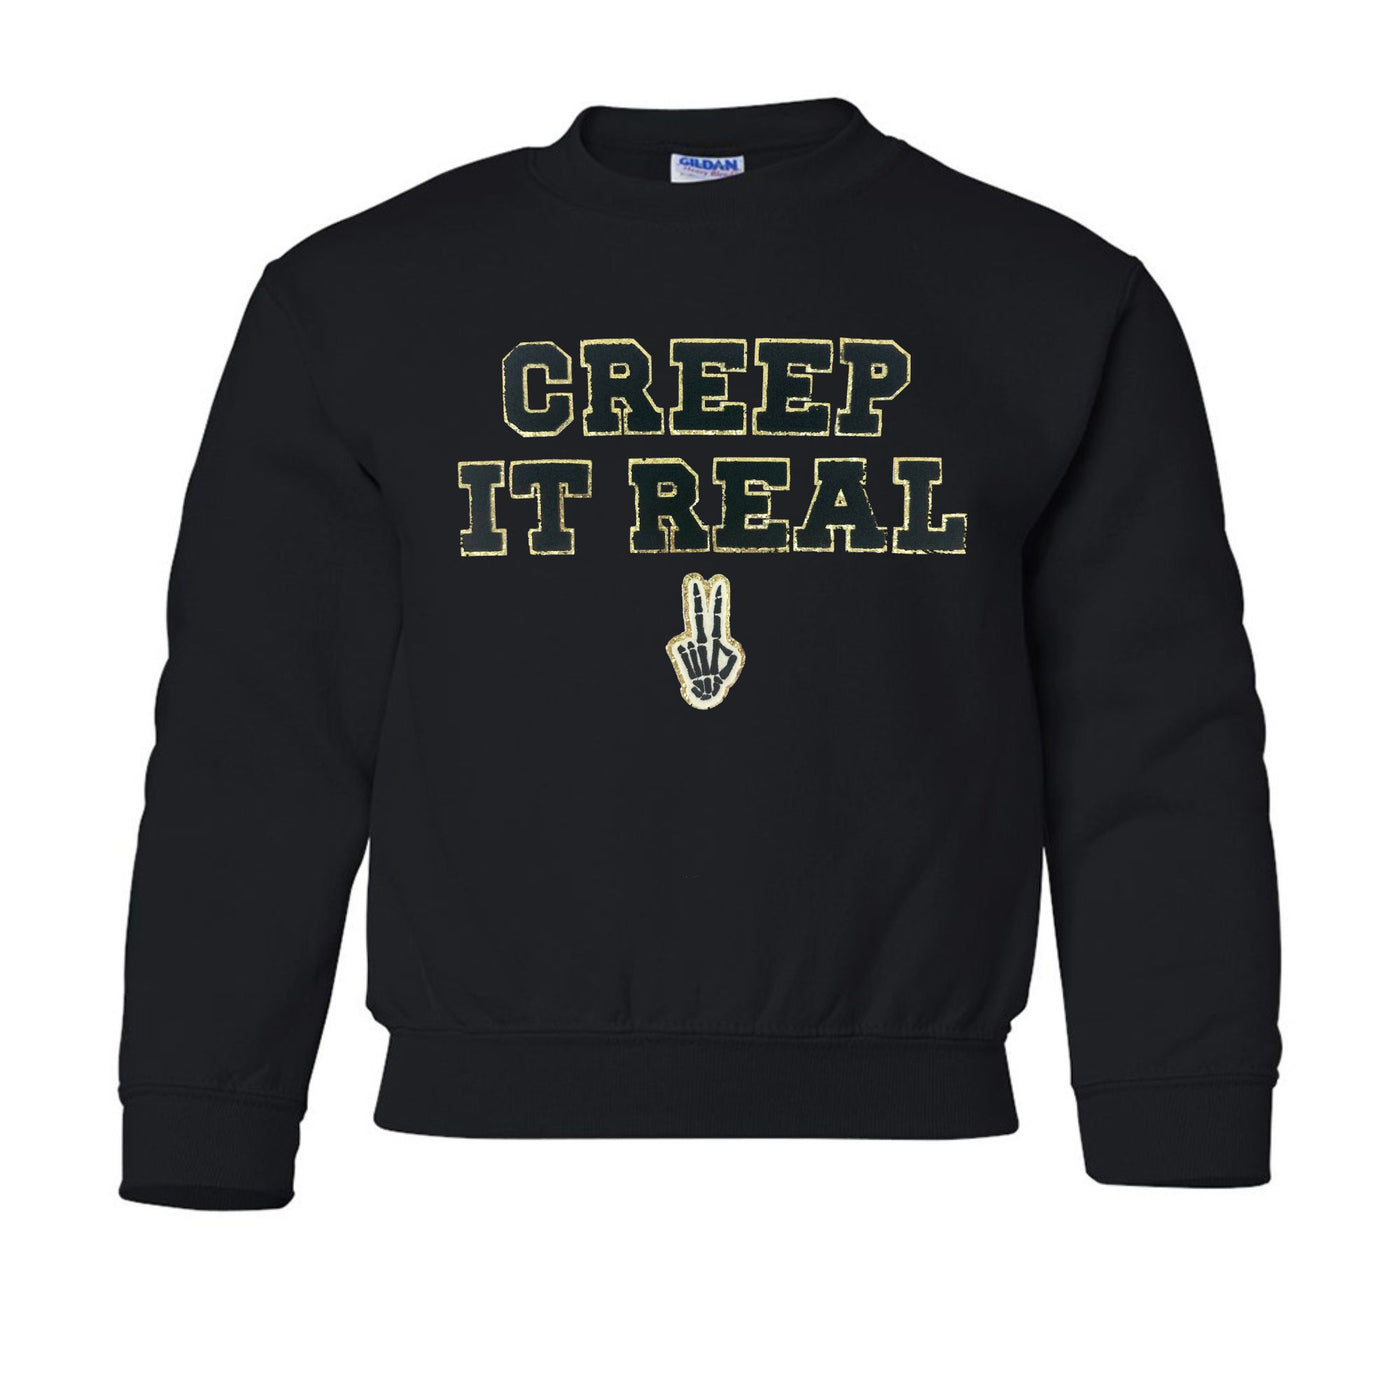 Kids 'Creep It Real' Letter Patch Crewneck Sweatshirt